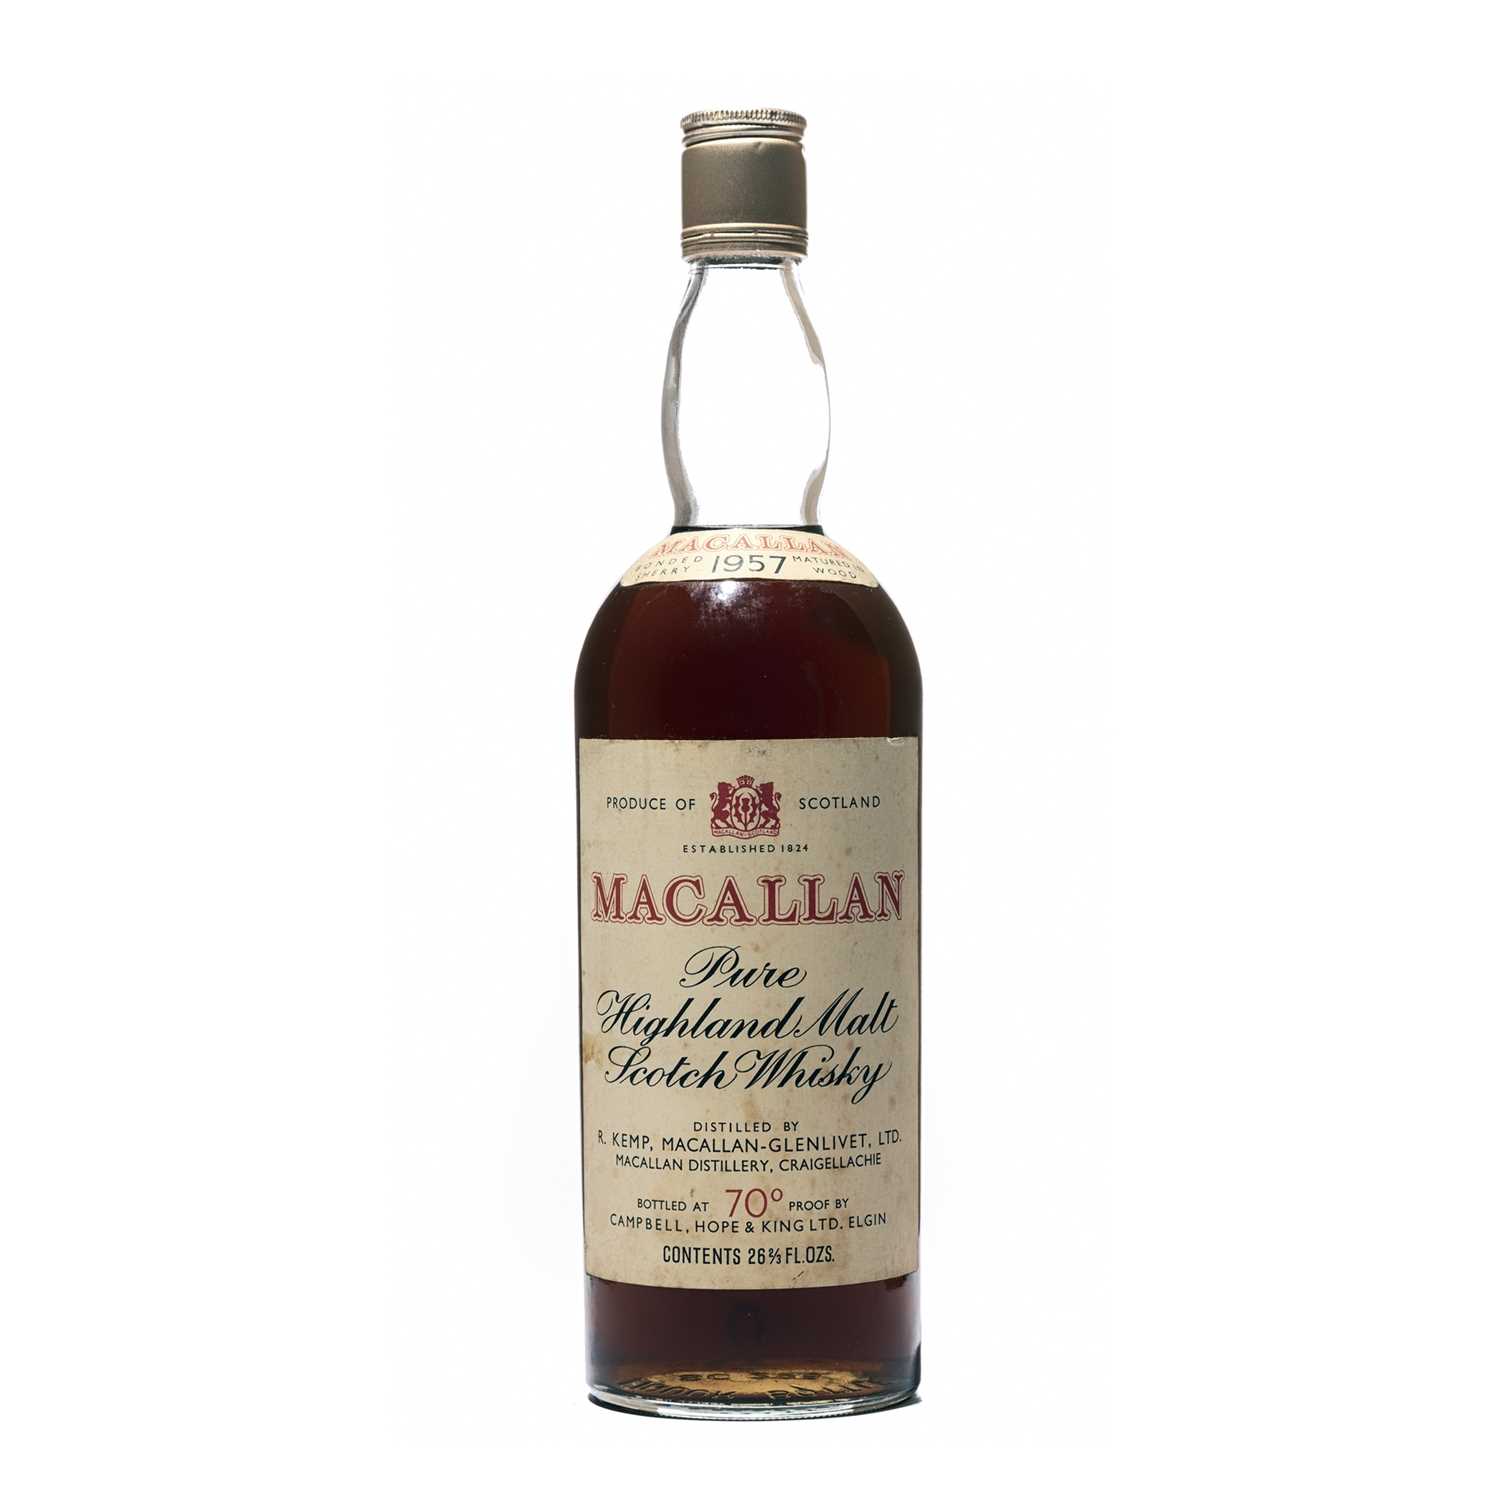 Lot 164 - 1 bottle 1957 Macallan